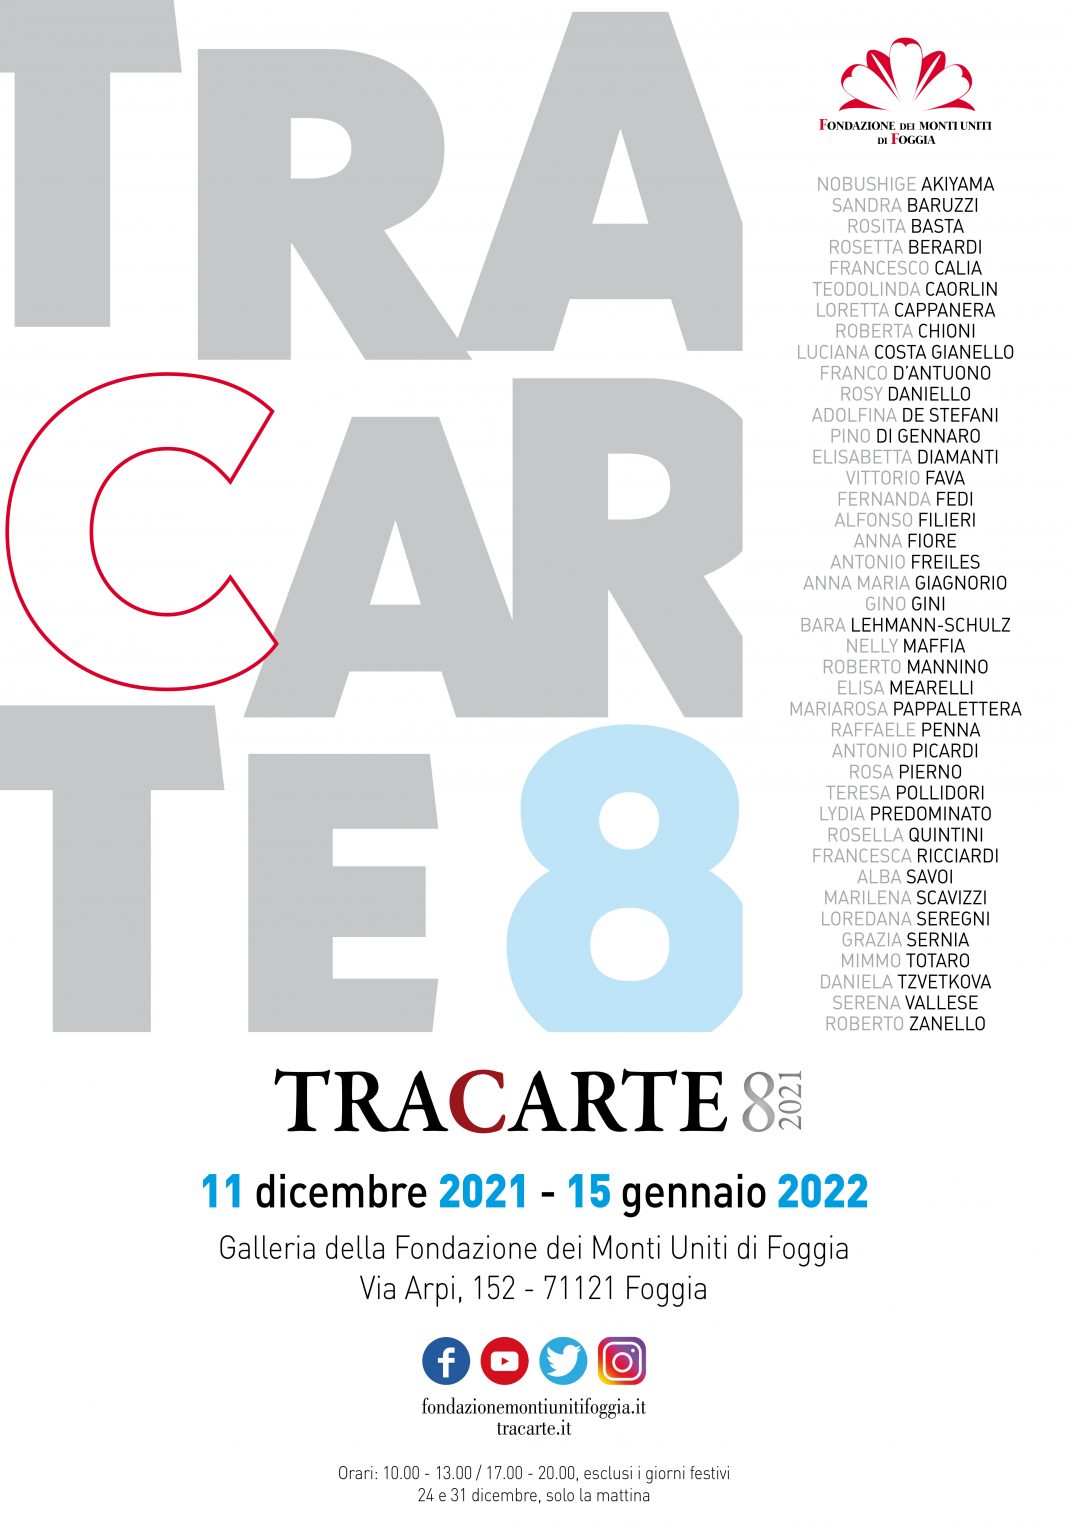 TraCarte. VIII edizionehttps://www.exibart.com/repository/media/formidable/11/img/b5f/Fondazione-TraCarte-8-locandina-1068x1526.jpg